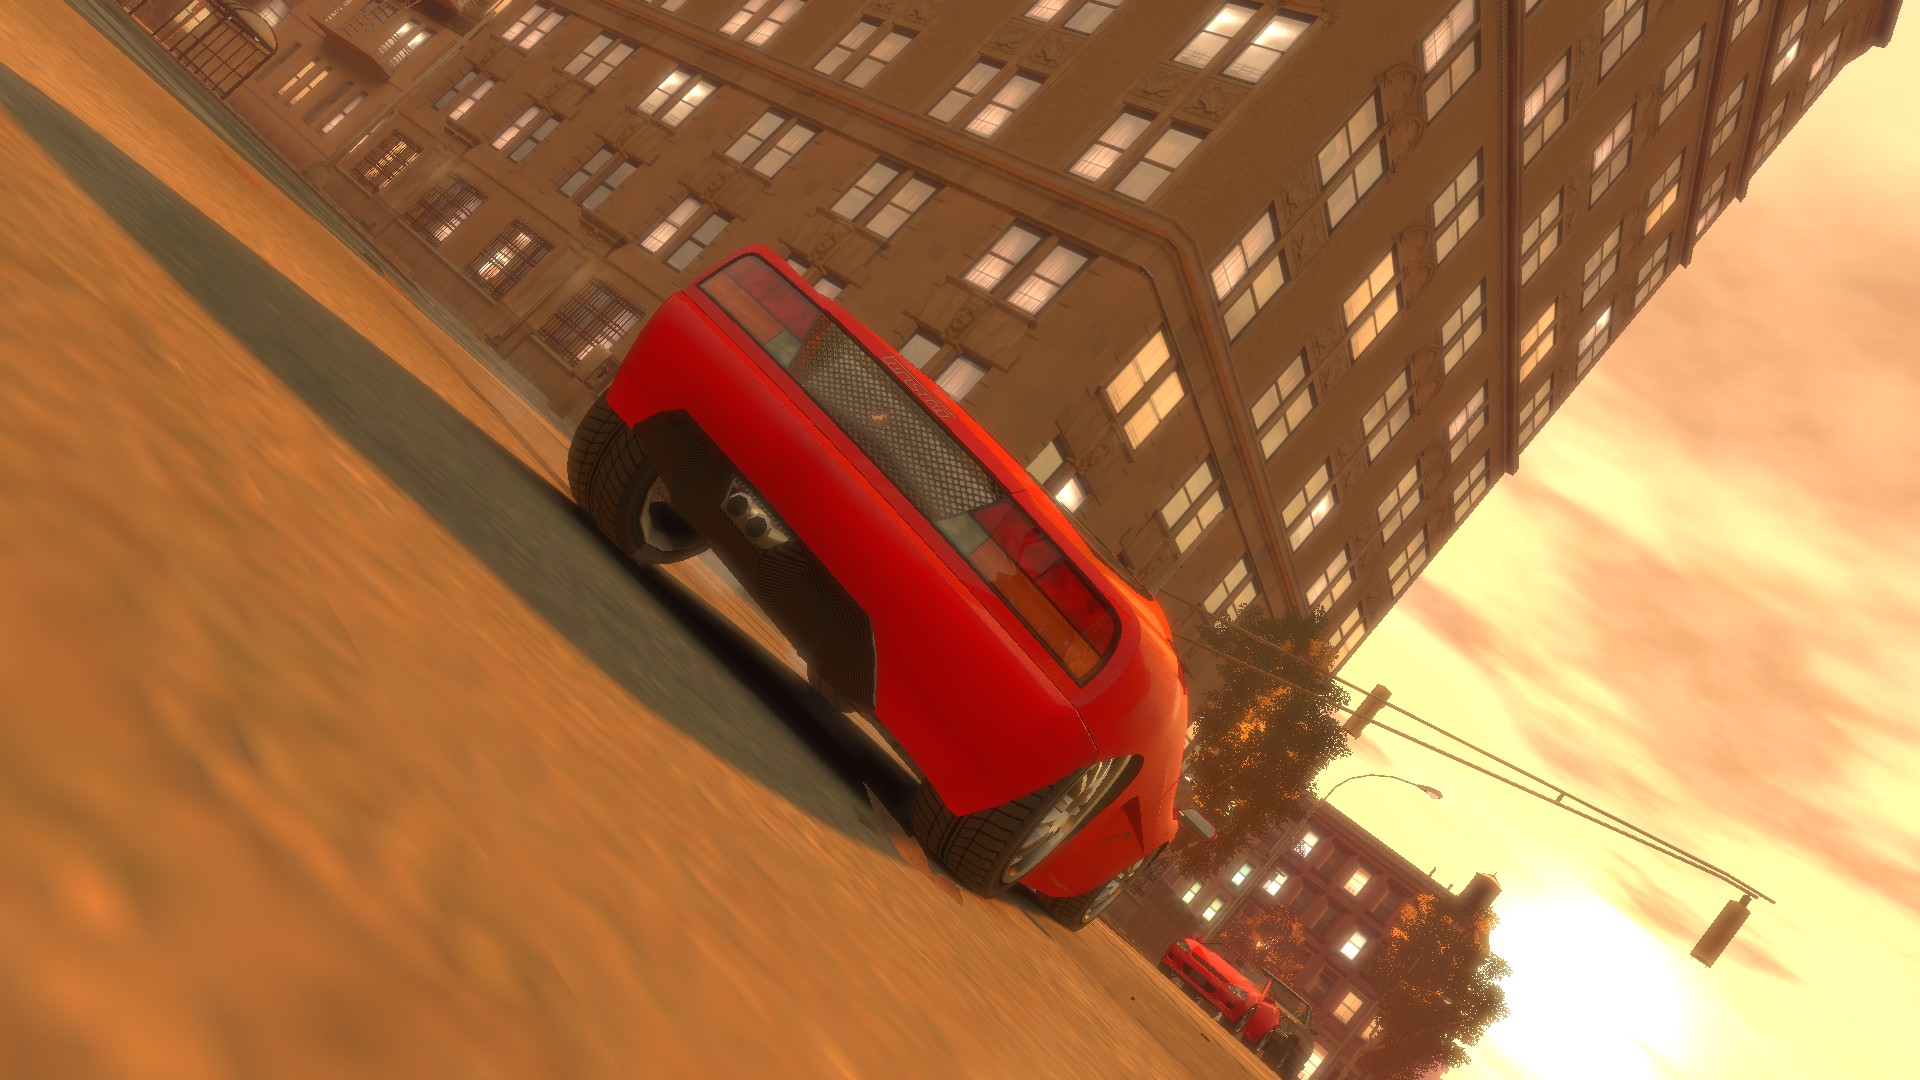 Grand Theft Auto desktop wallpaper by RockStar - a vibrant video game image.